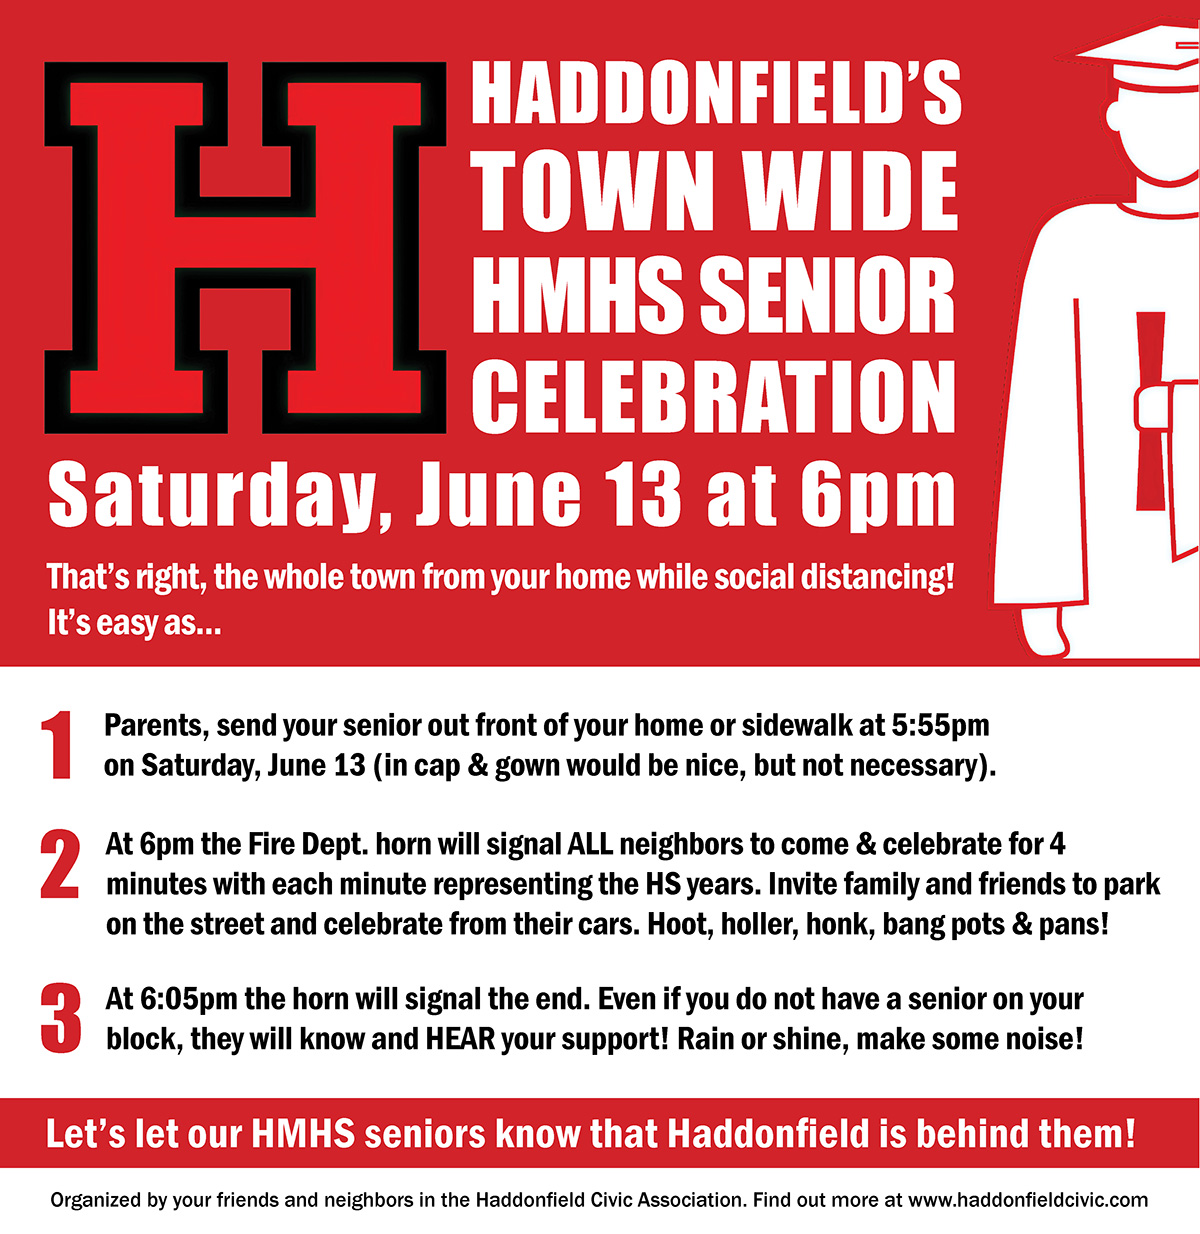 HaddonfieldHaddonfield's Town wide HMHS Senior Celebration - Saturday, June 13th at 6pm Town Wide Celebra for HMHS Senior - Final Social Media2